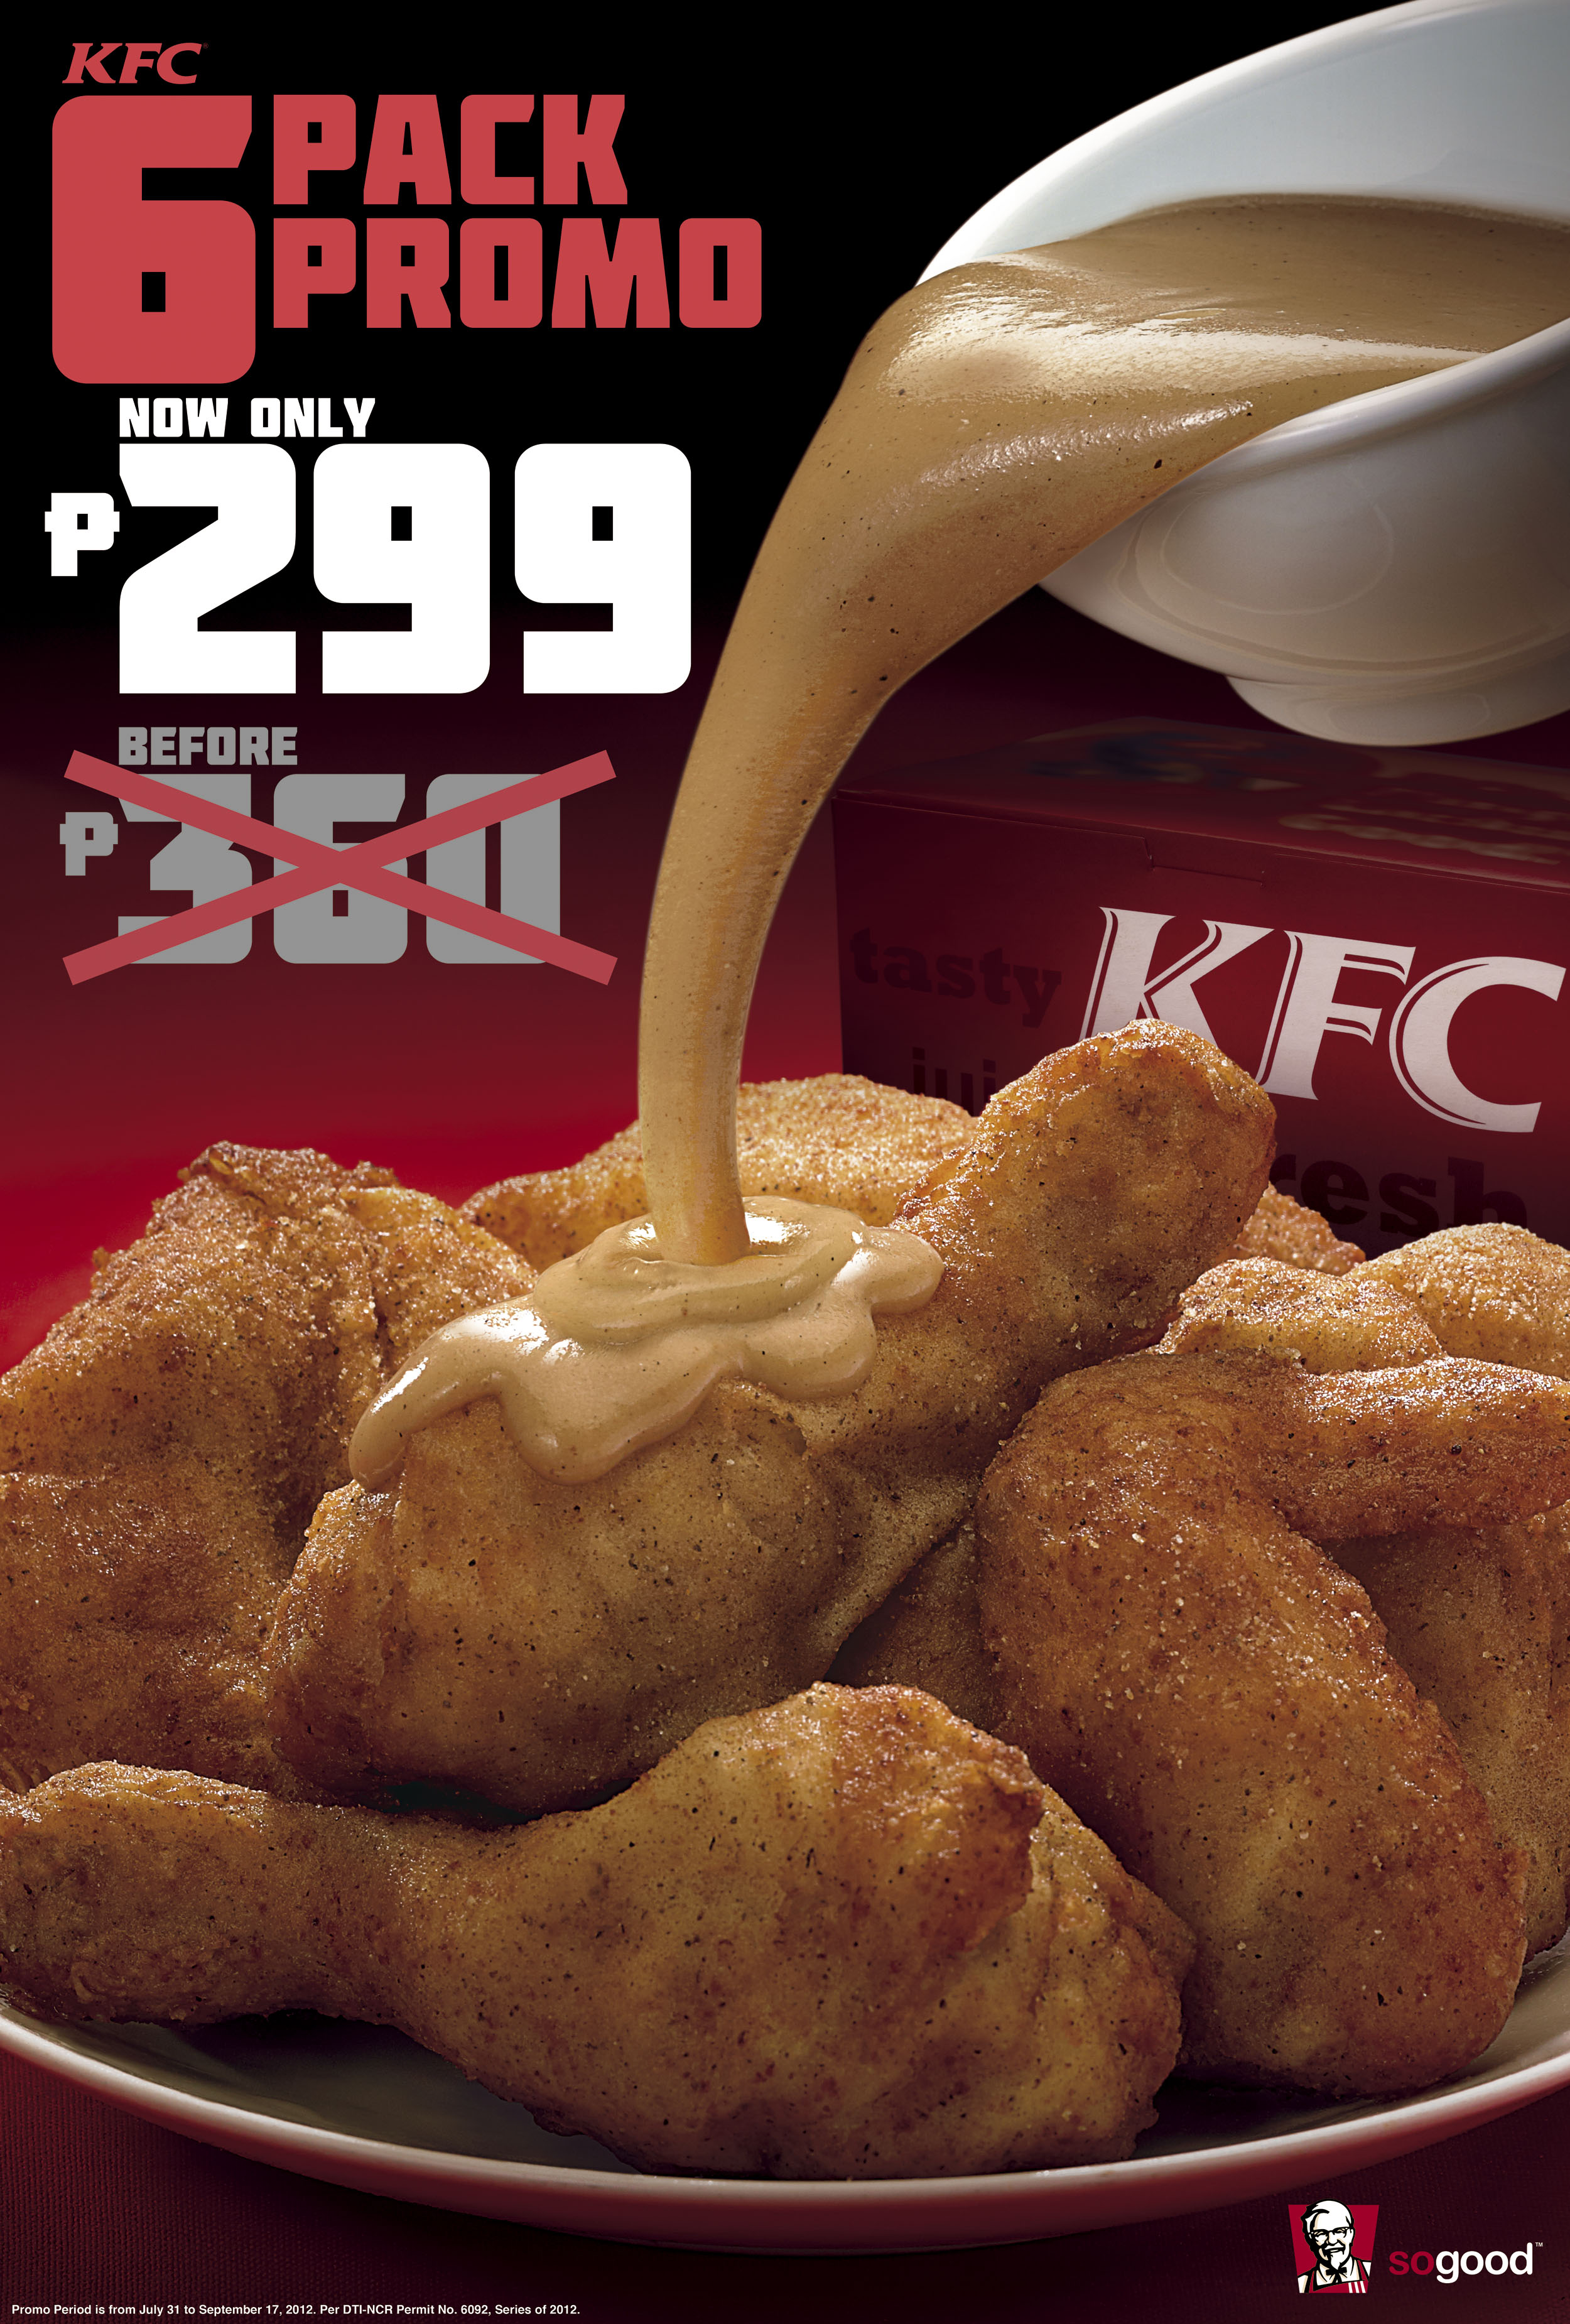 KFC 6 Pack Promo.jpg